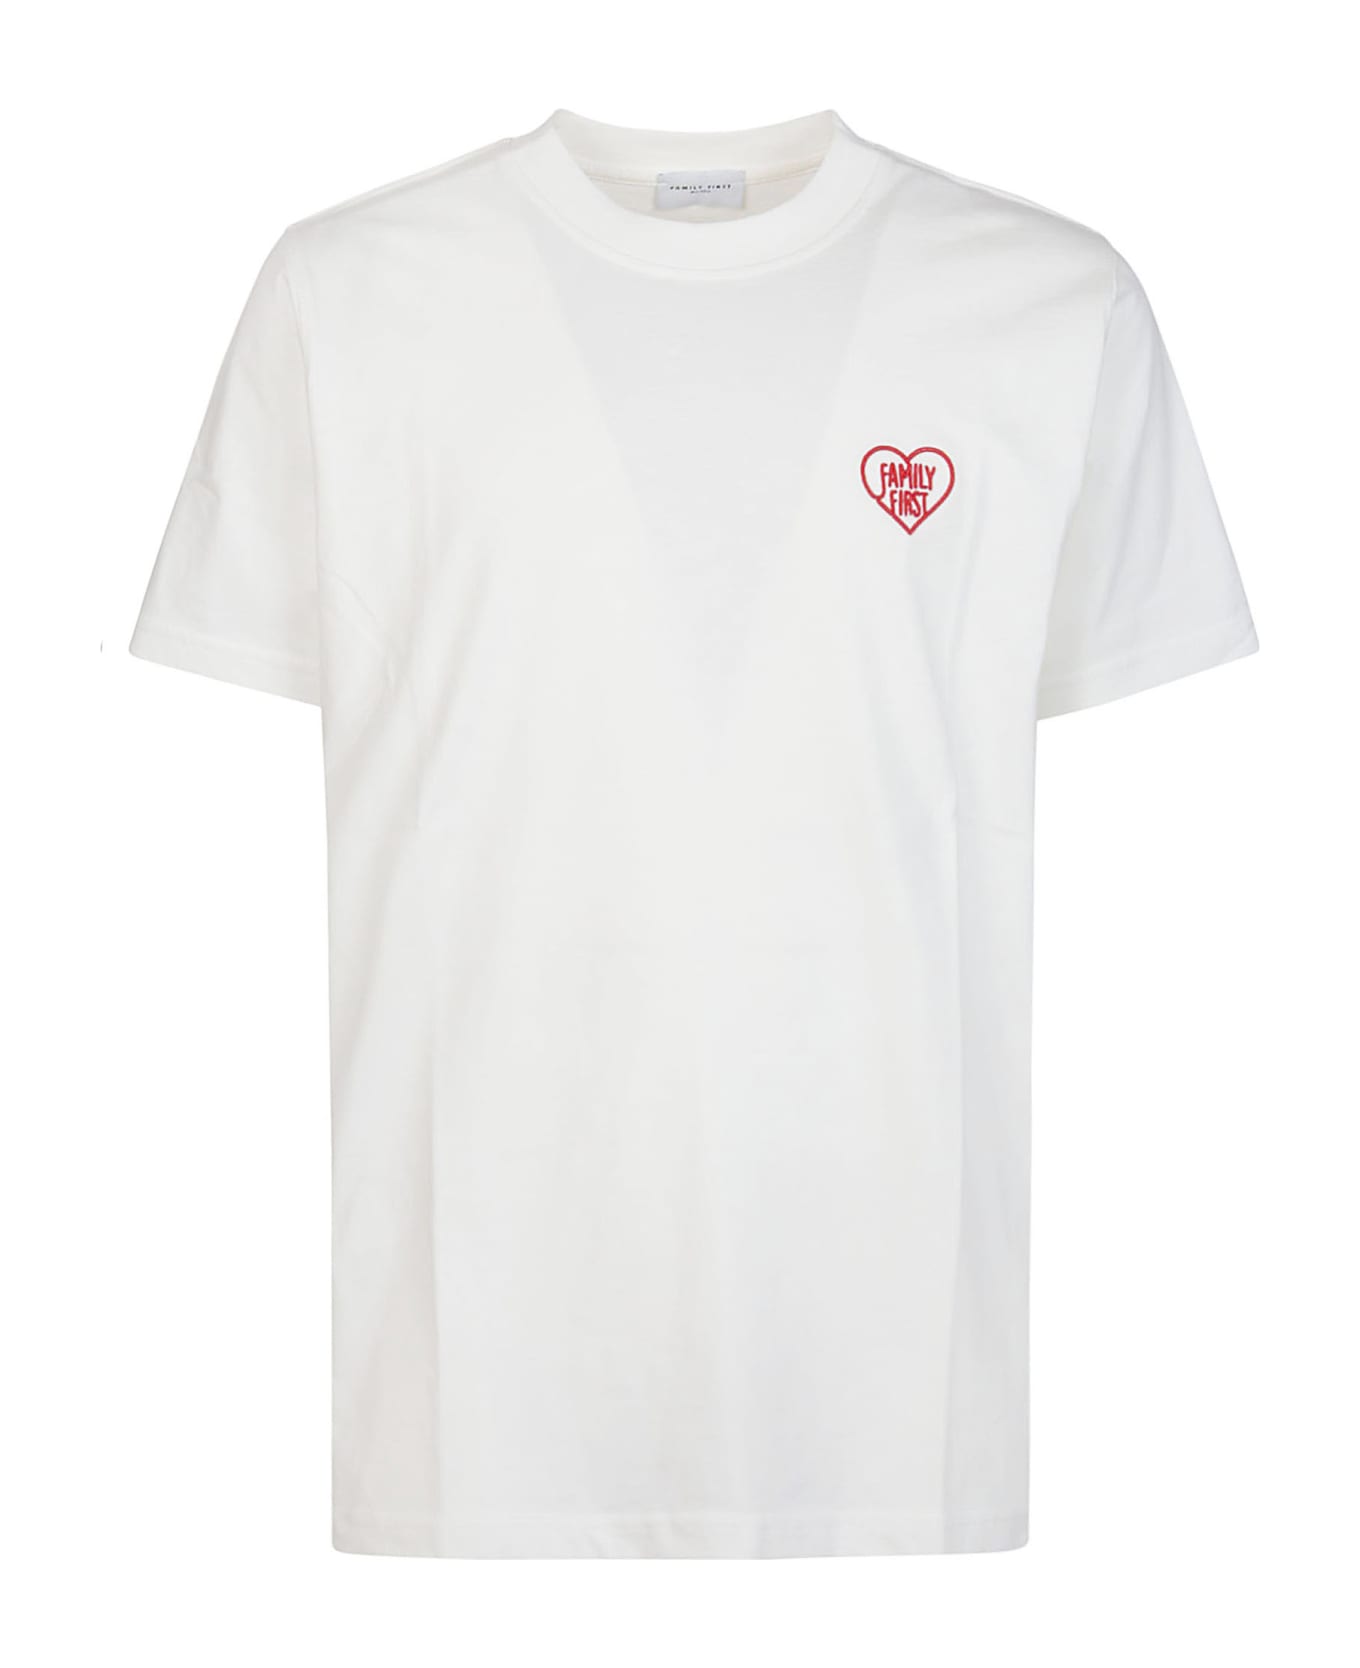 Family First Milano Heart T-shirt - White シャツ